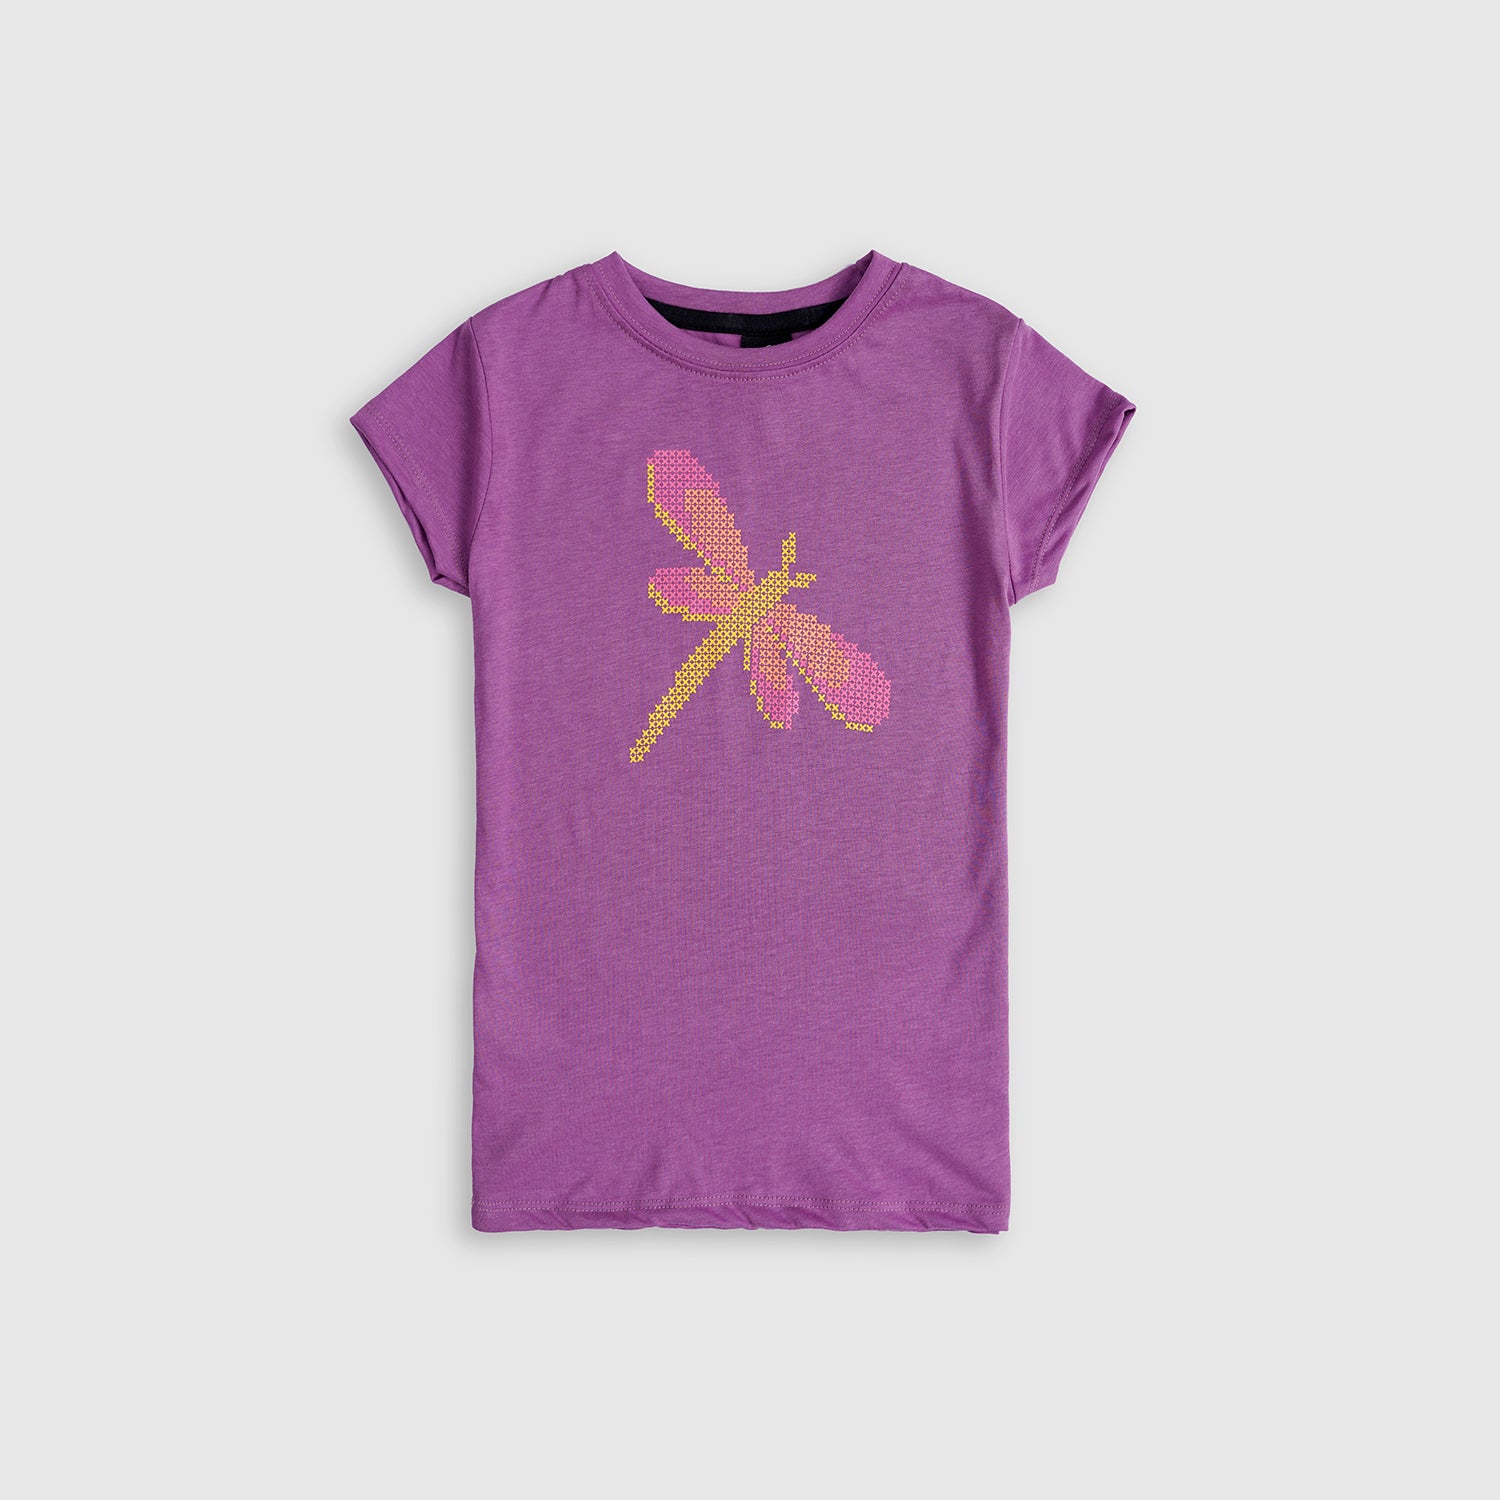 Girls Soft Cotton Printed Purple T-Shirt